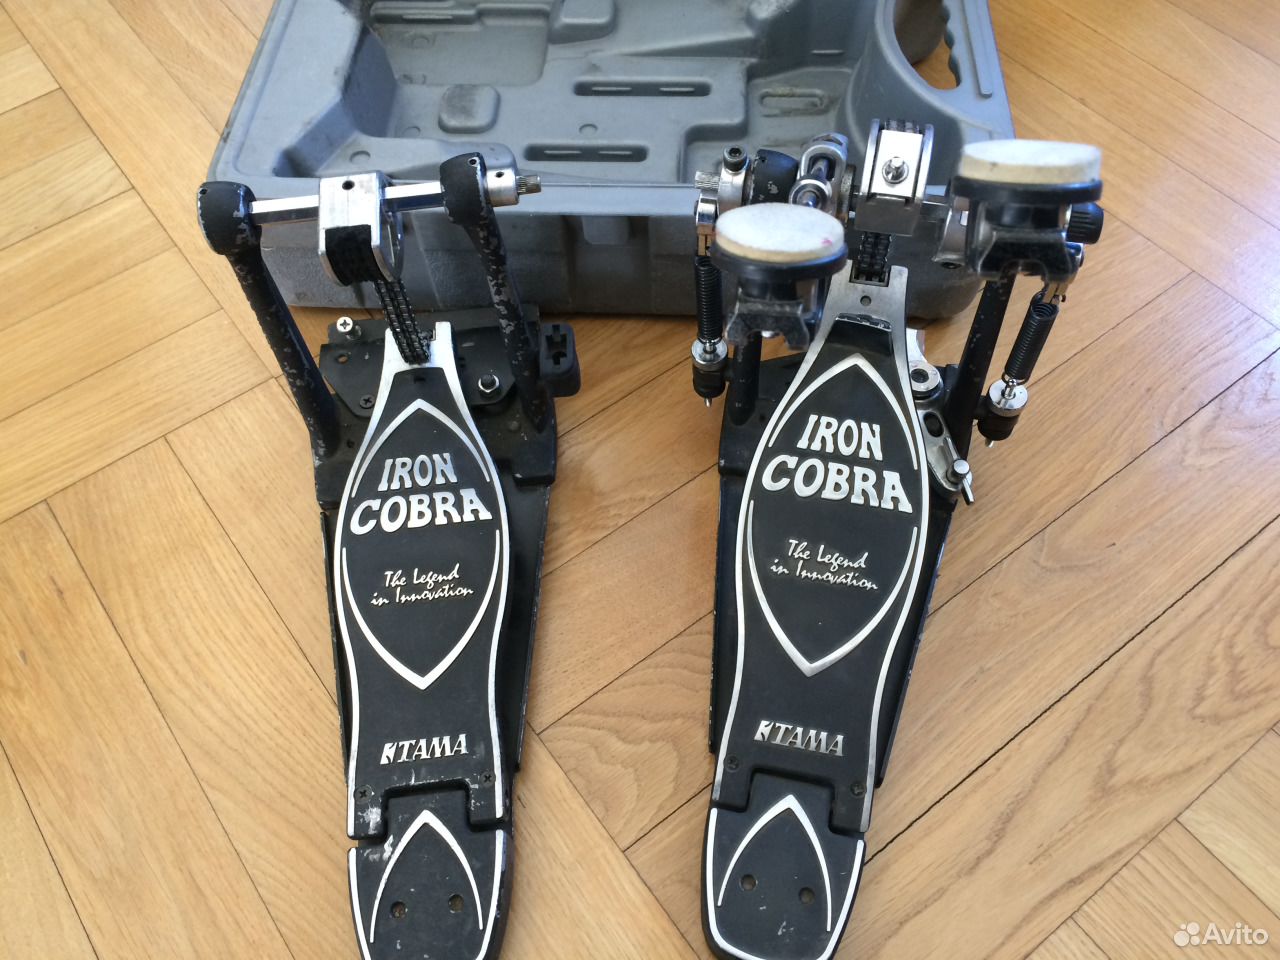 Tama cobra. Tama Iron Cobra 900. Педаль Iron Cobra 900. Tama Iron Cobra 900 Rolling Glide. Tama Iron Cobra кардан.